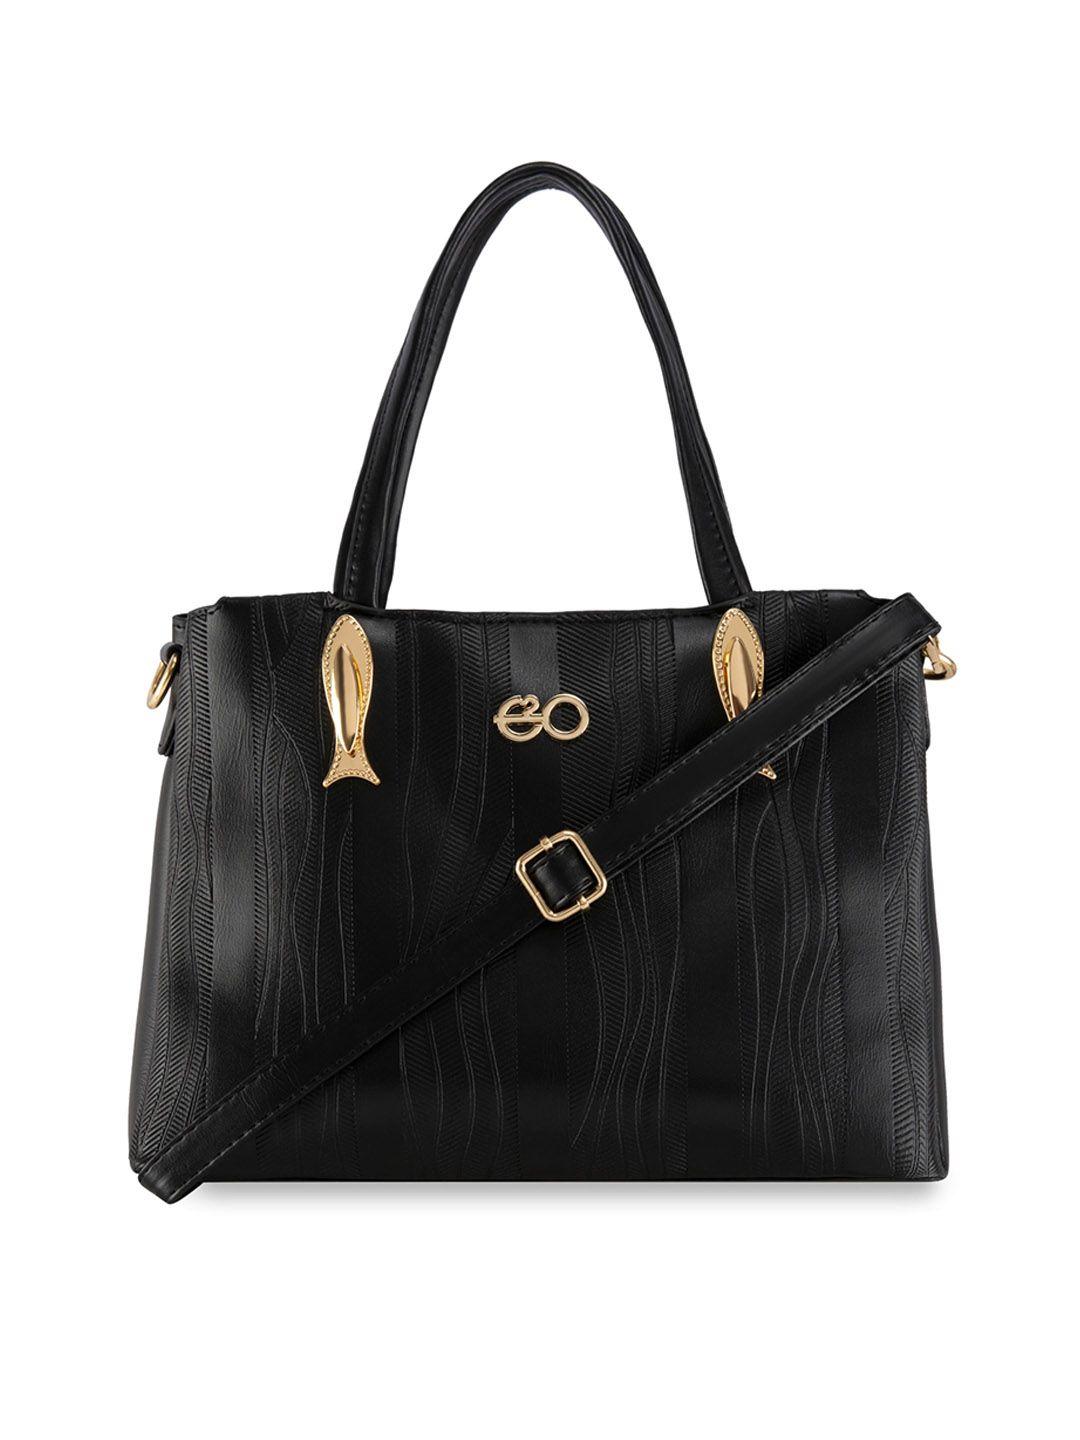 e2o black pu oversized shopper handheld bag with tasselled